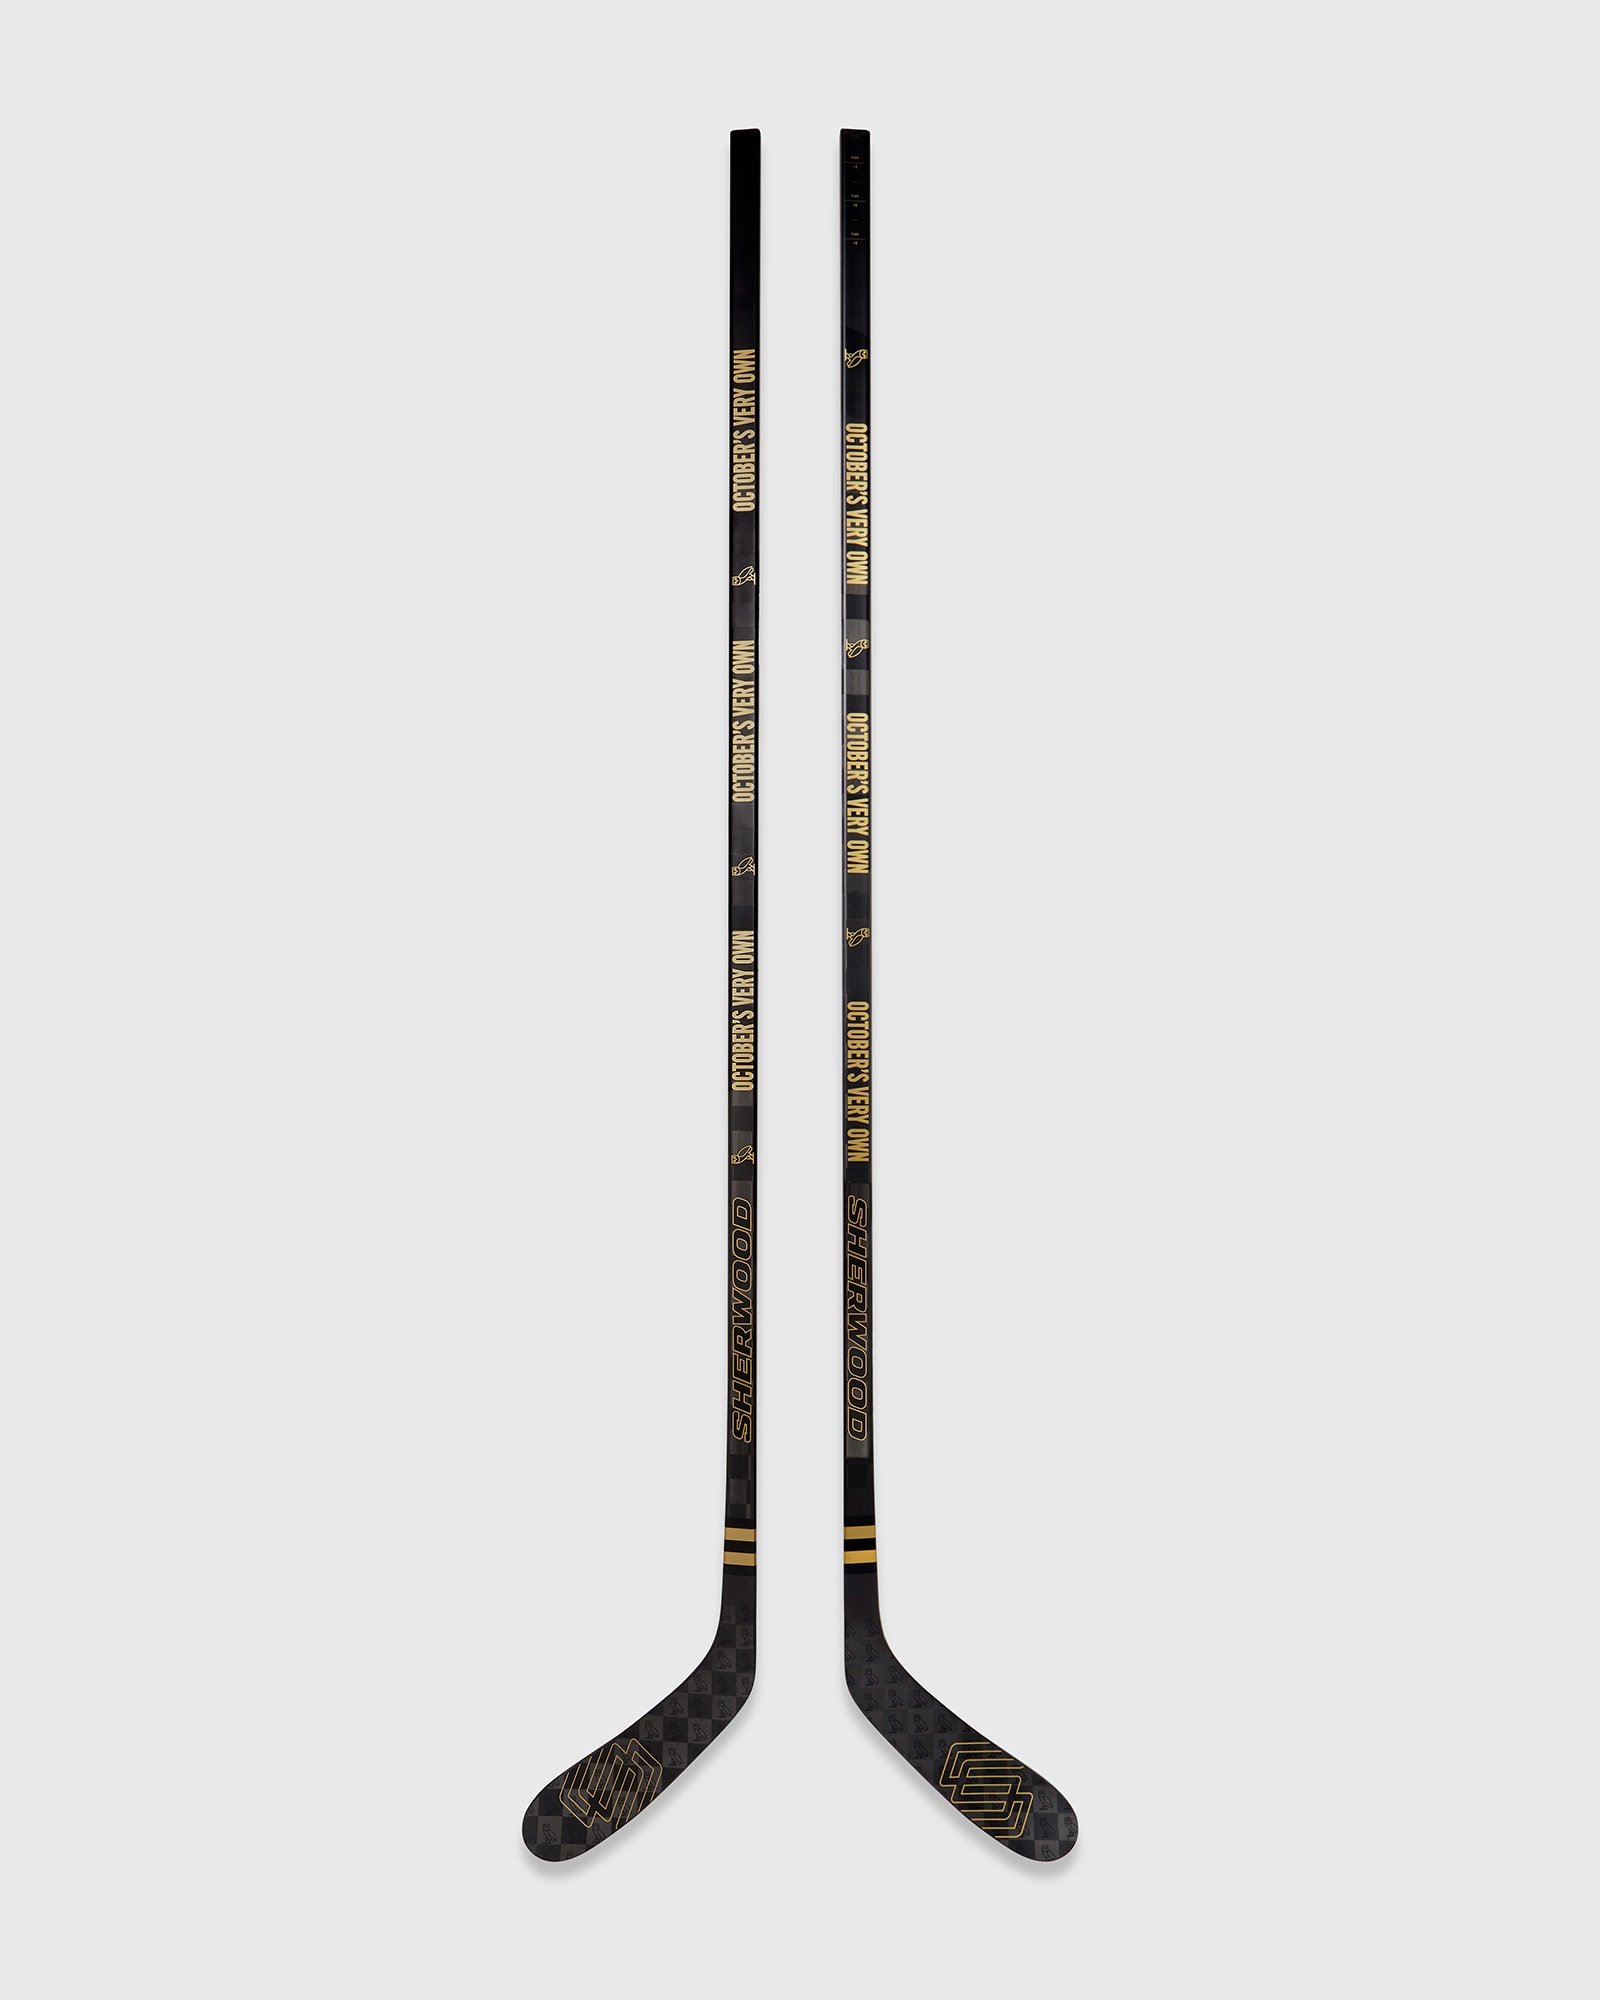 Ovo x sherwood hockey gear collection